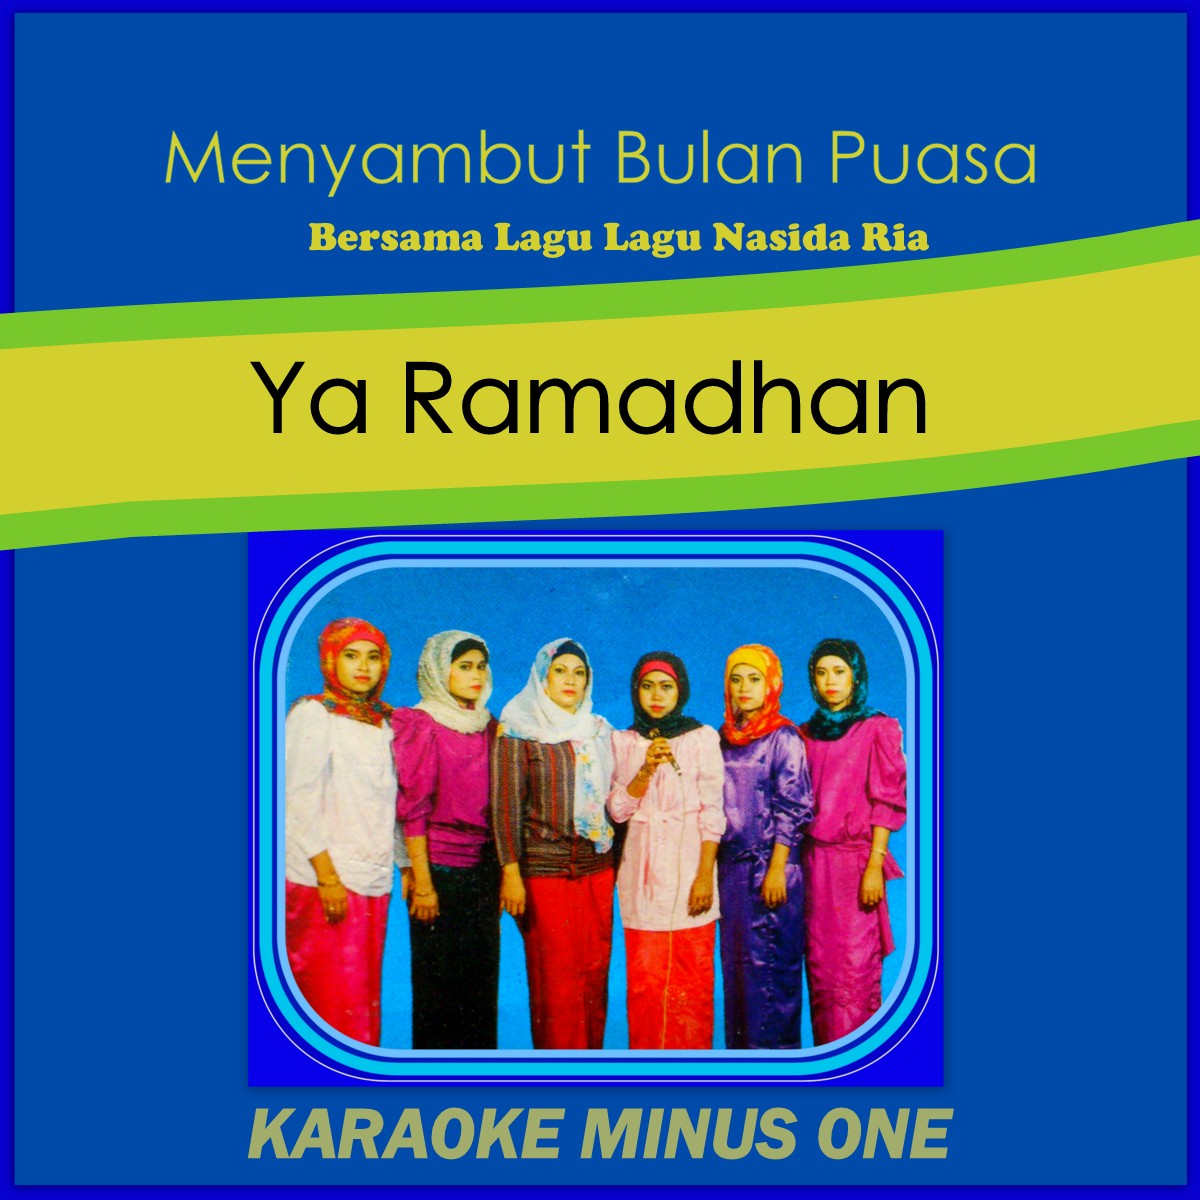 RUMAH QASIDAH 2: Karaokean menyambut bulan Ramadhan